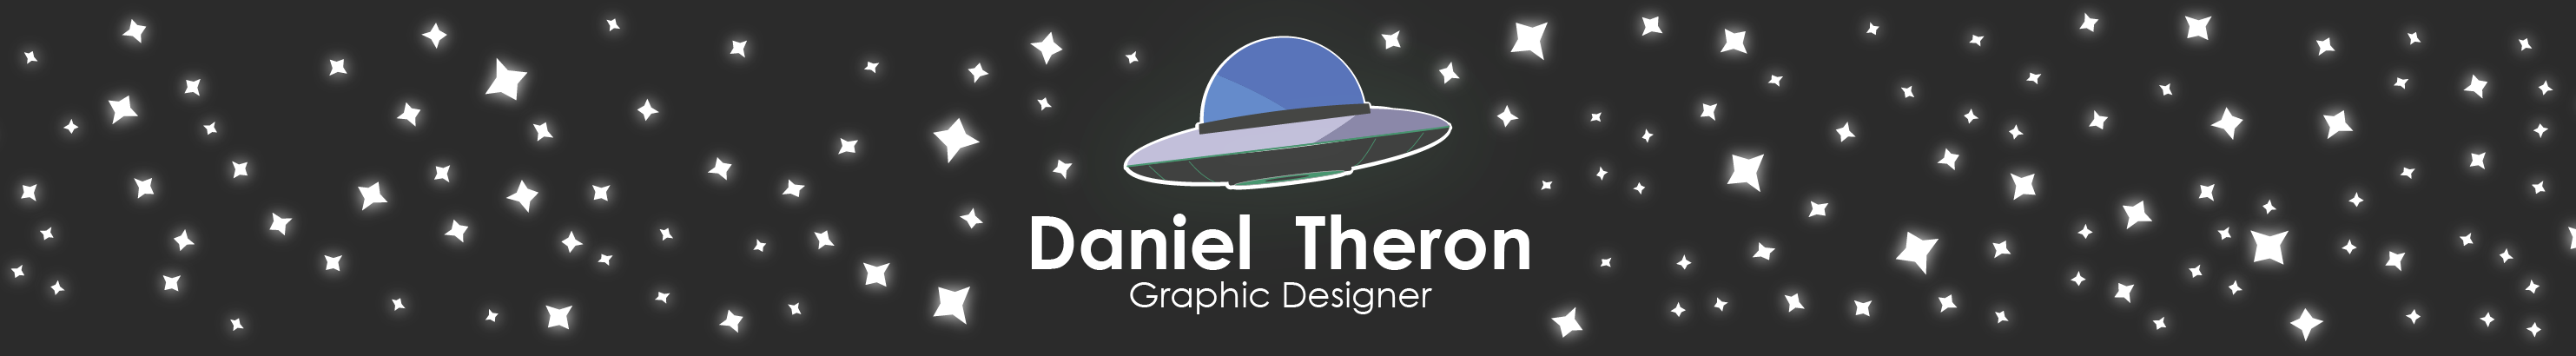 Banner profilu uživatele Daniel Theron